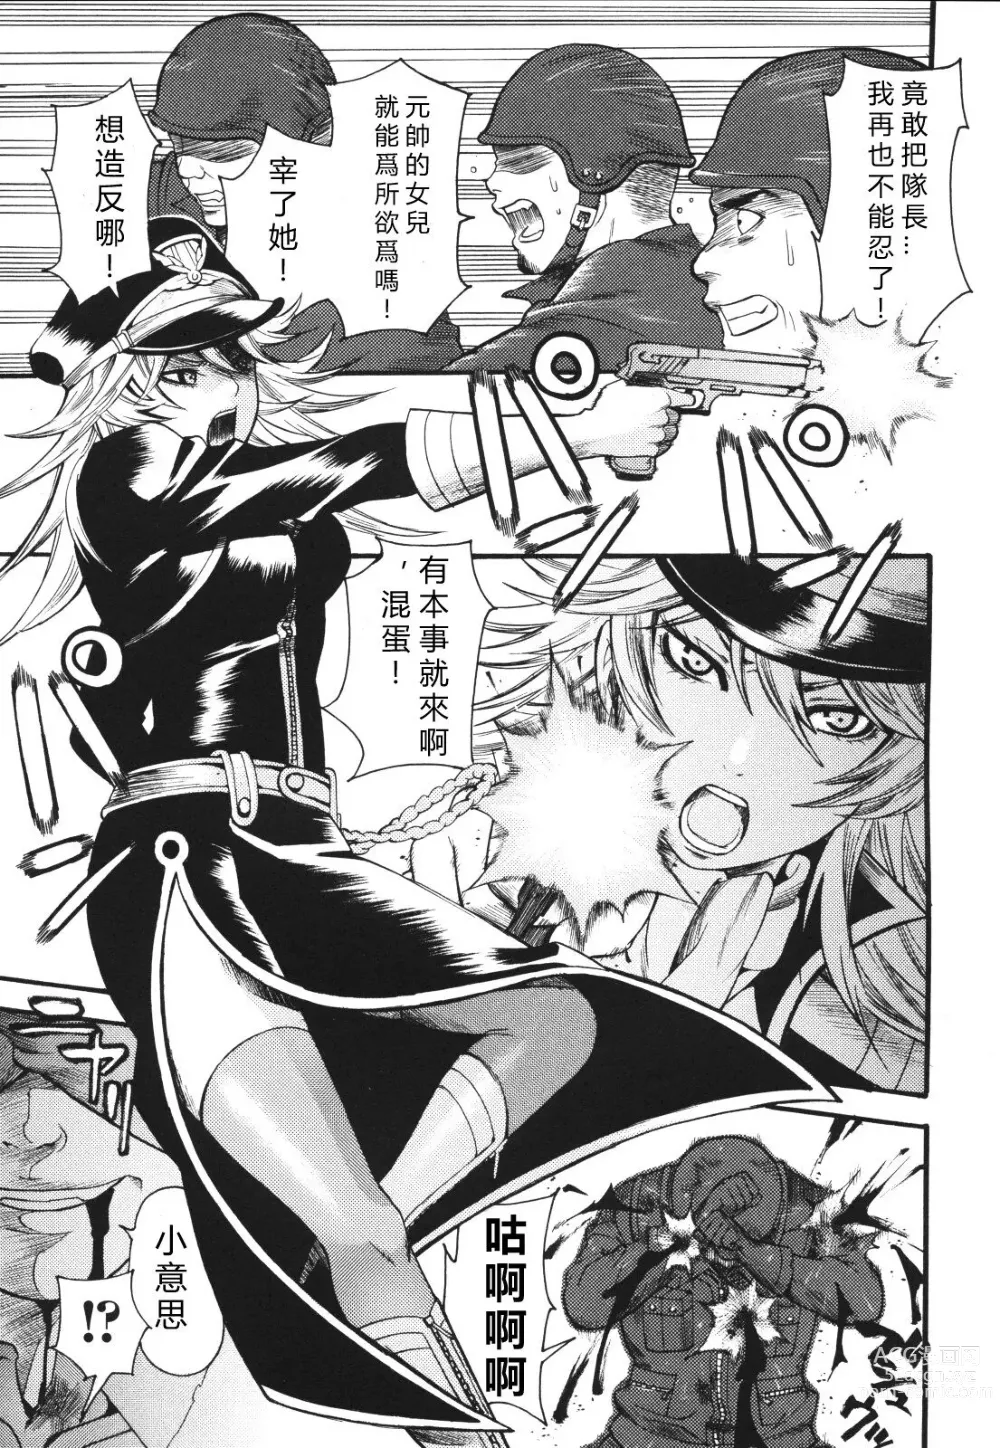 Page 3 of manga Yokubou Junkie